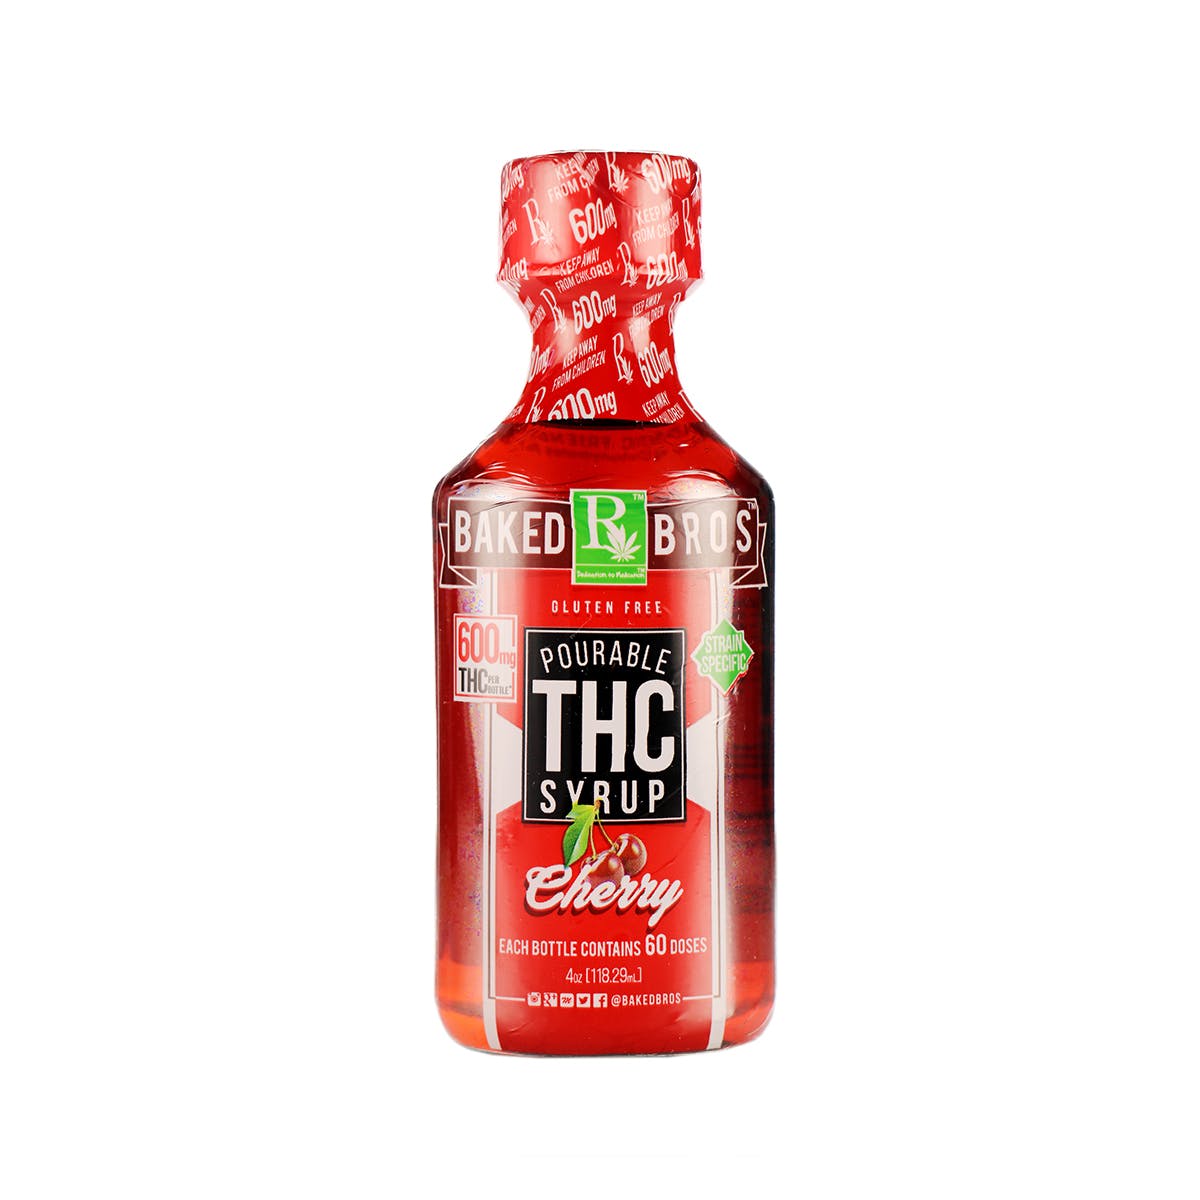 THC Syrup Cherry 600mg